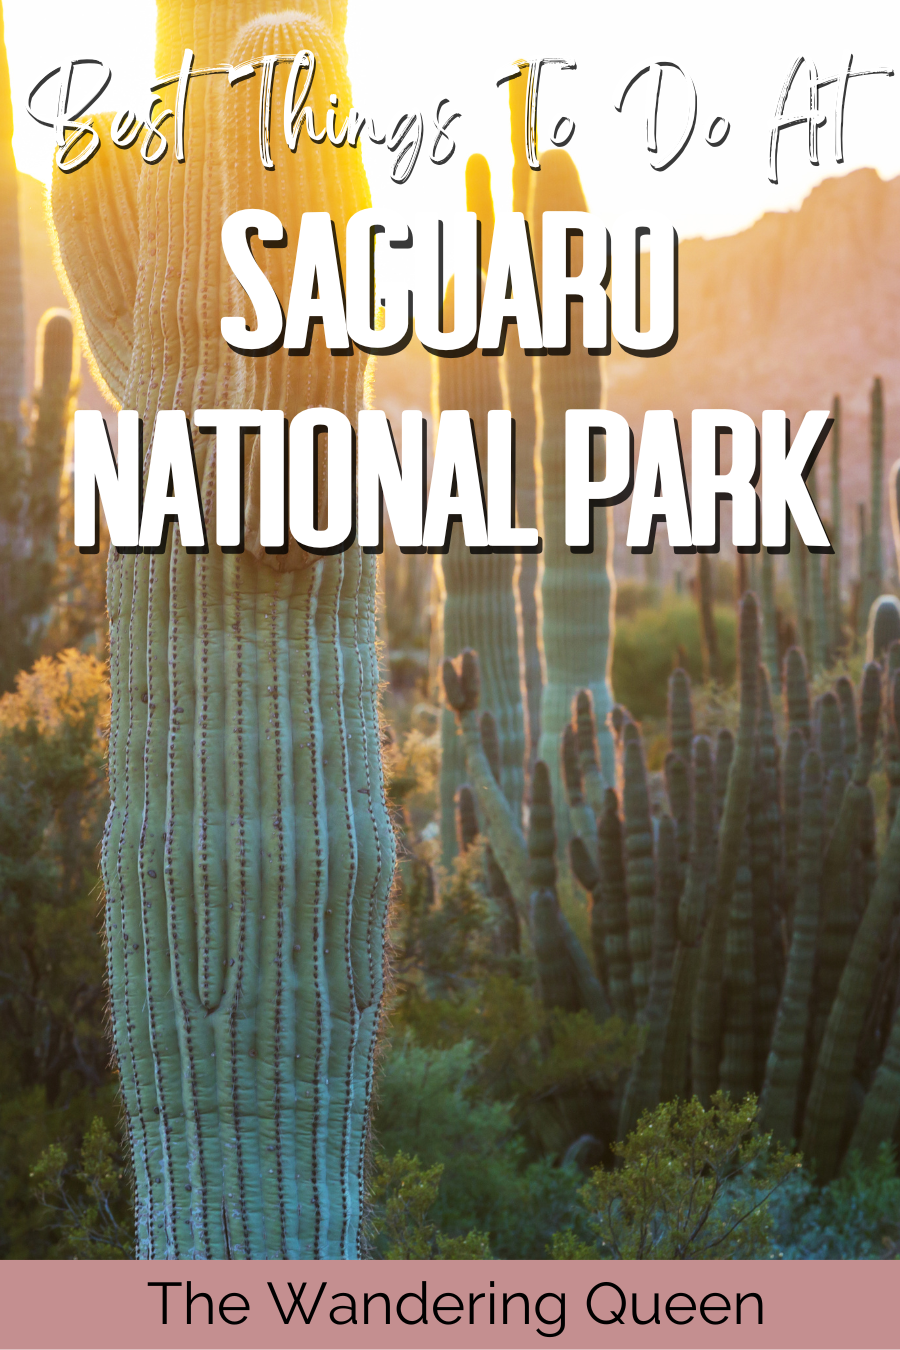 Saguaro National Park Patch - Rincon Peak